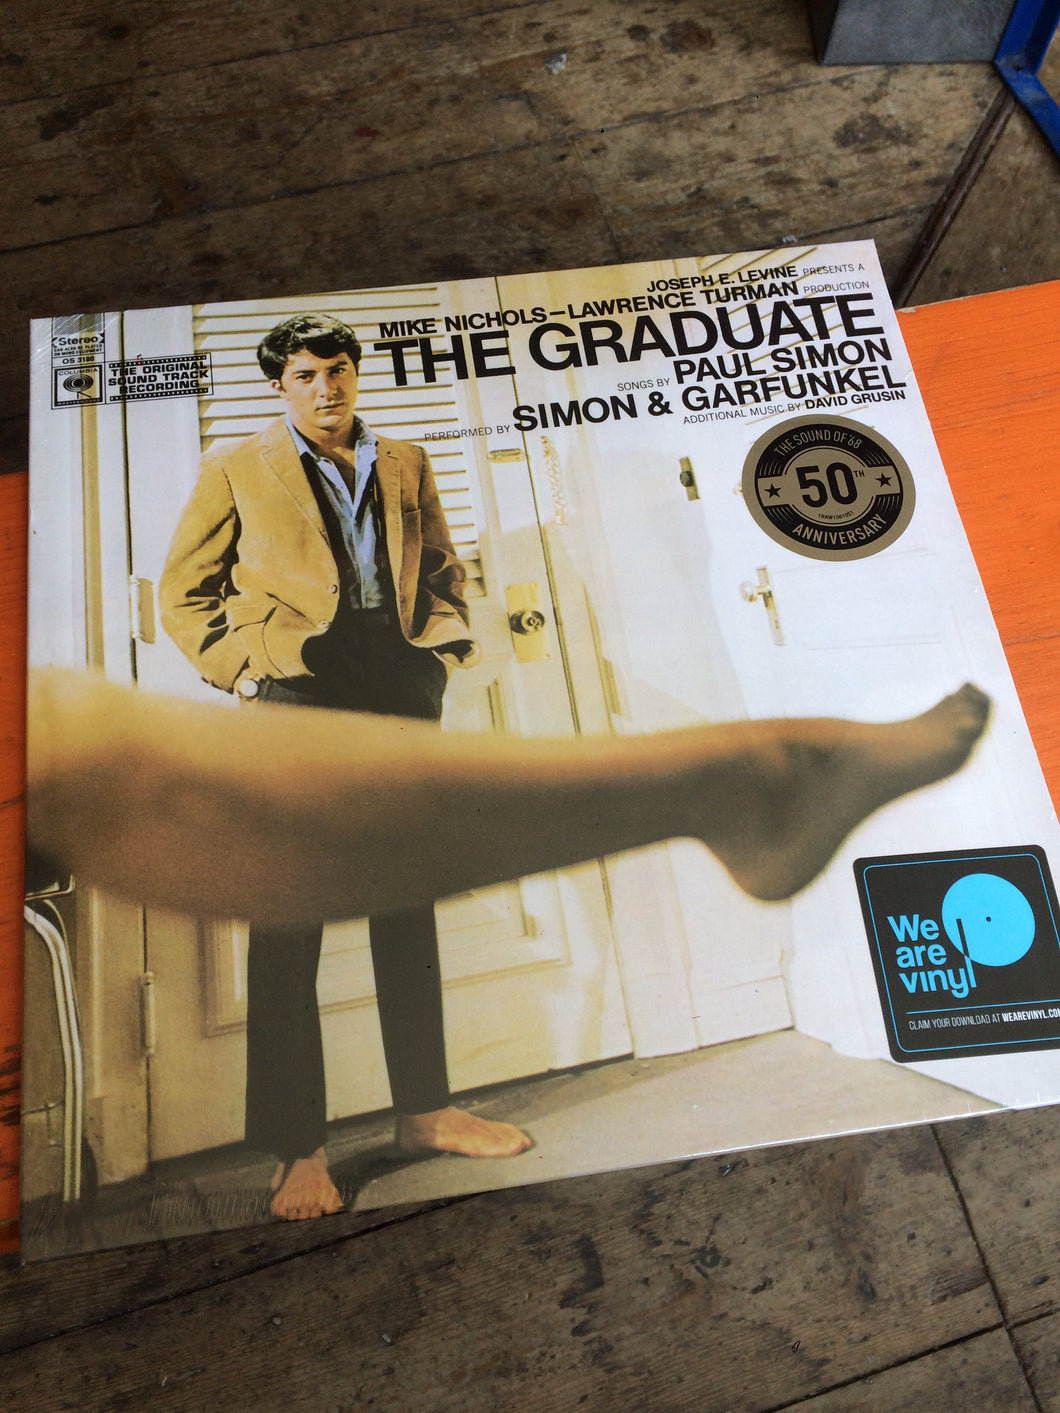 Simon & Garfunkel / David Grusin - The Graduate OST